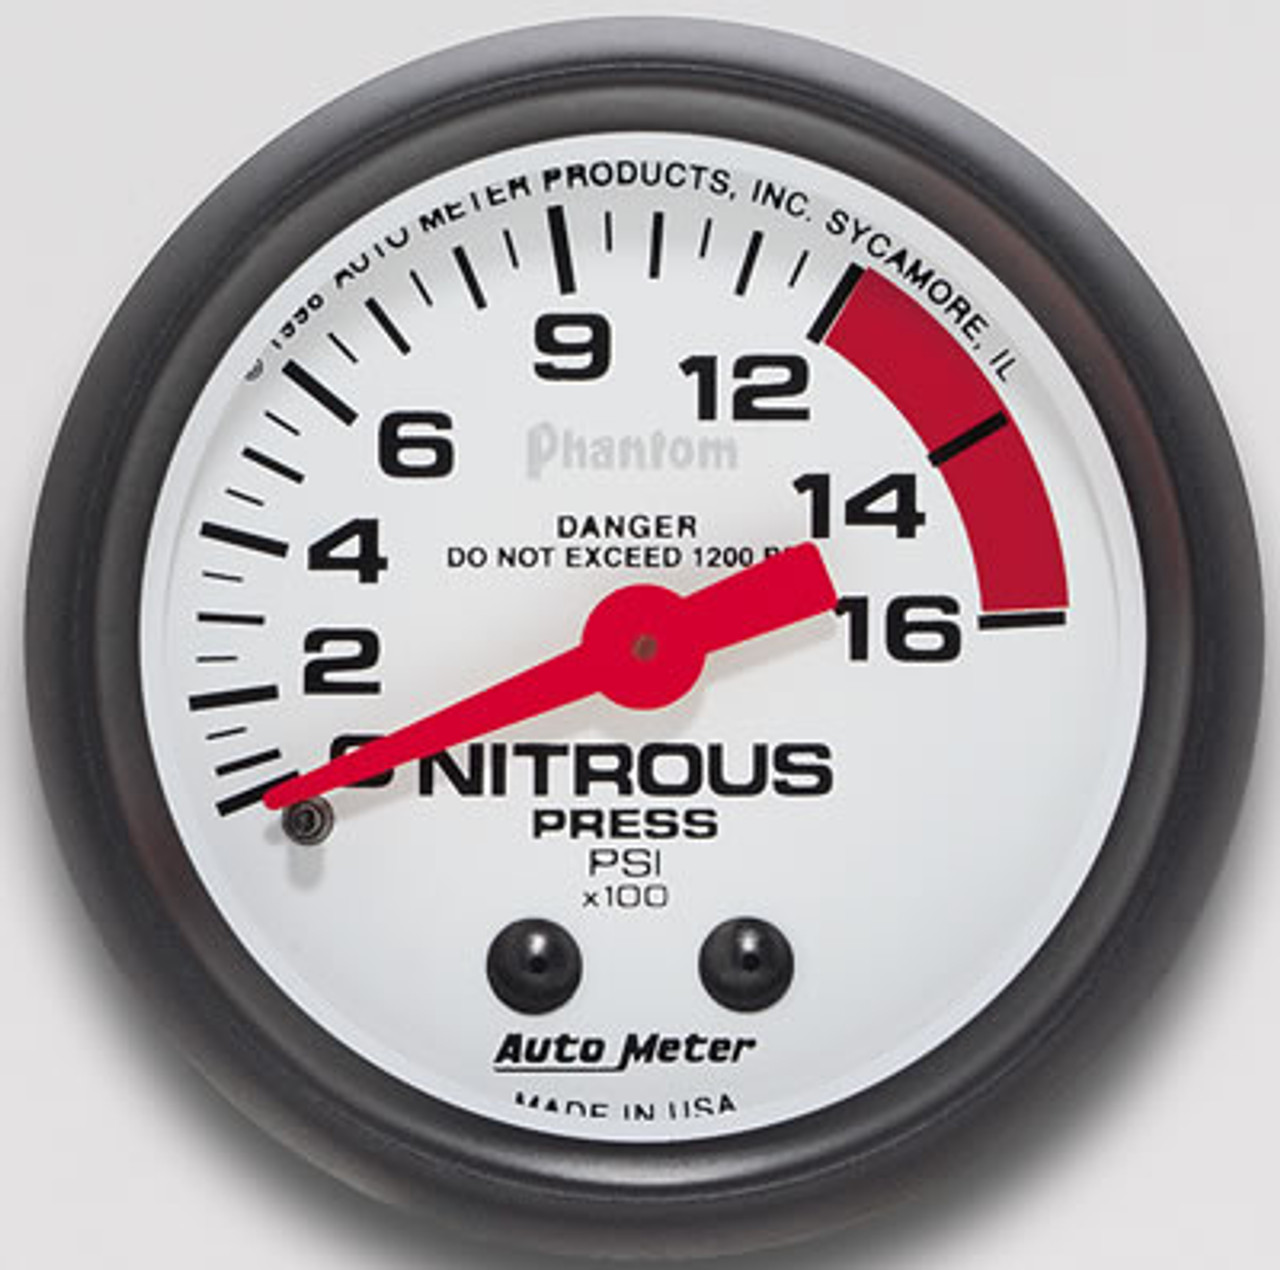 Auto Meter Phantom - Fuel Pressure Gauge: 0-30 PSI (ATM-5760)